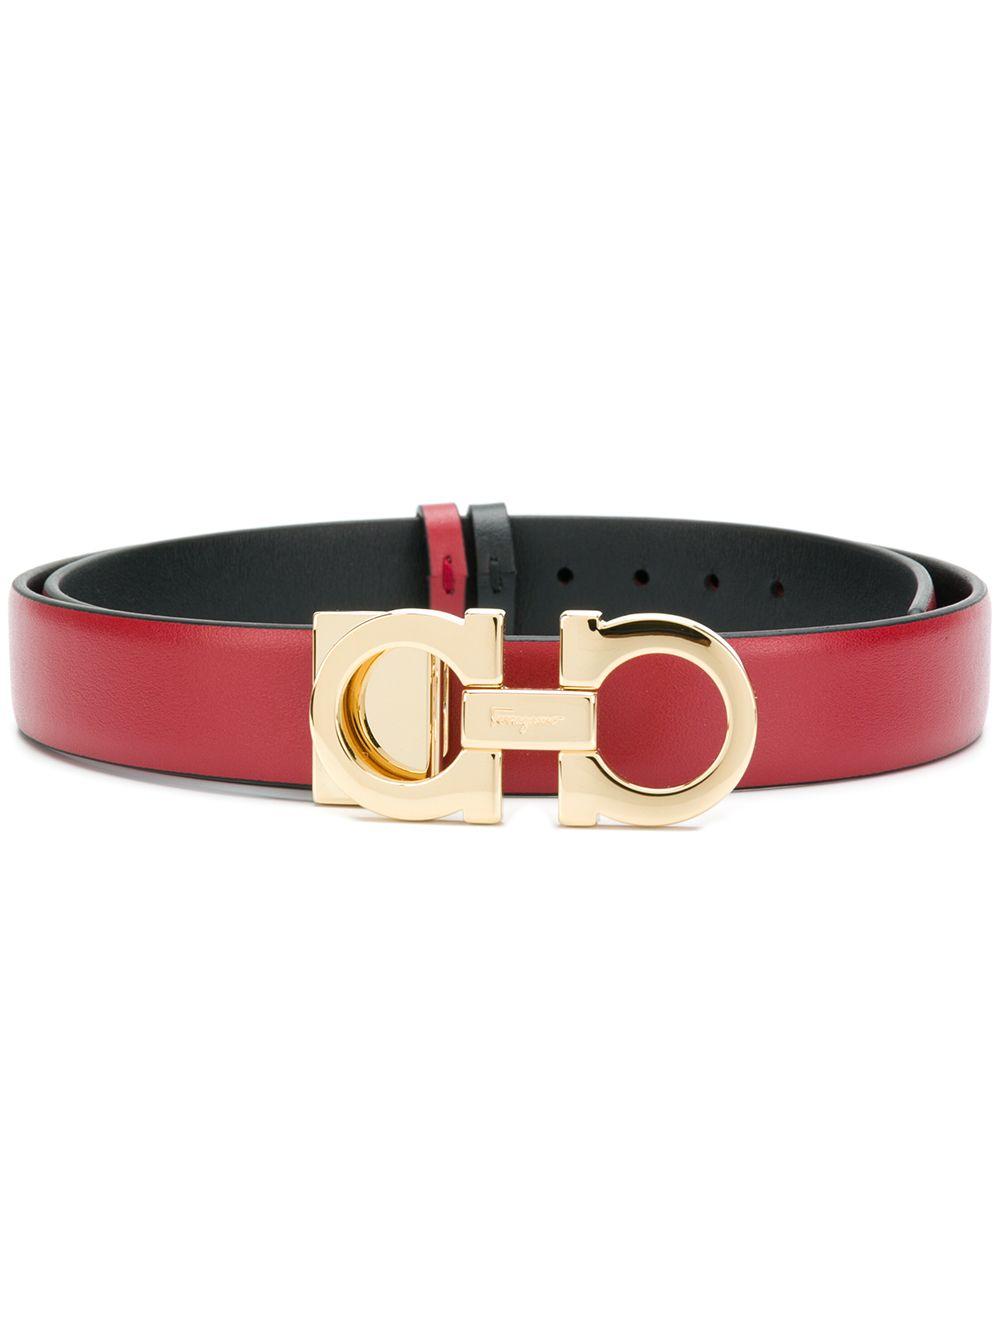 Ferragamo Leather Gancio Reversible Belt in Red - Save 22% - Lyst